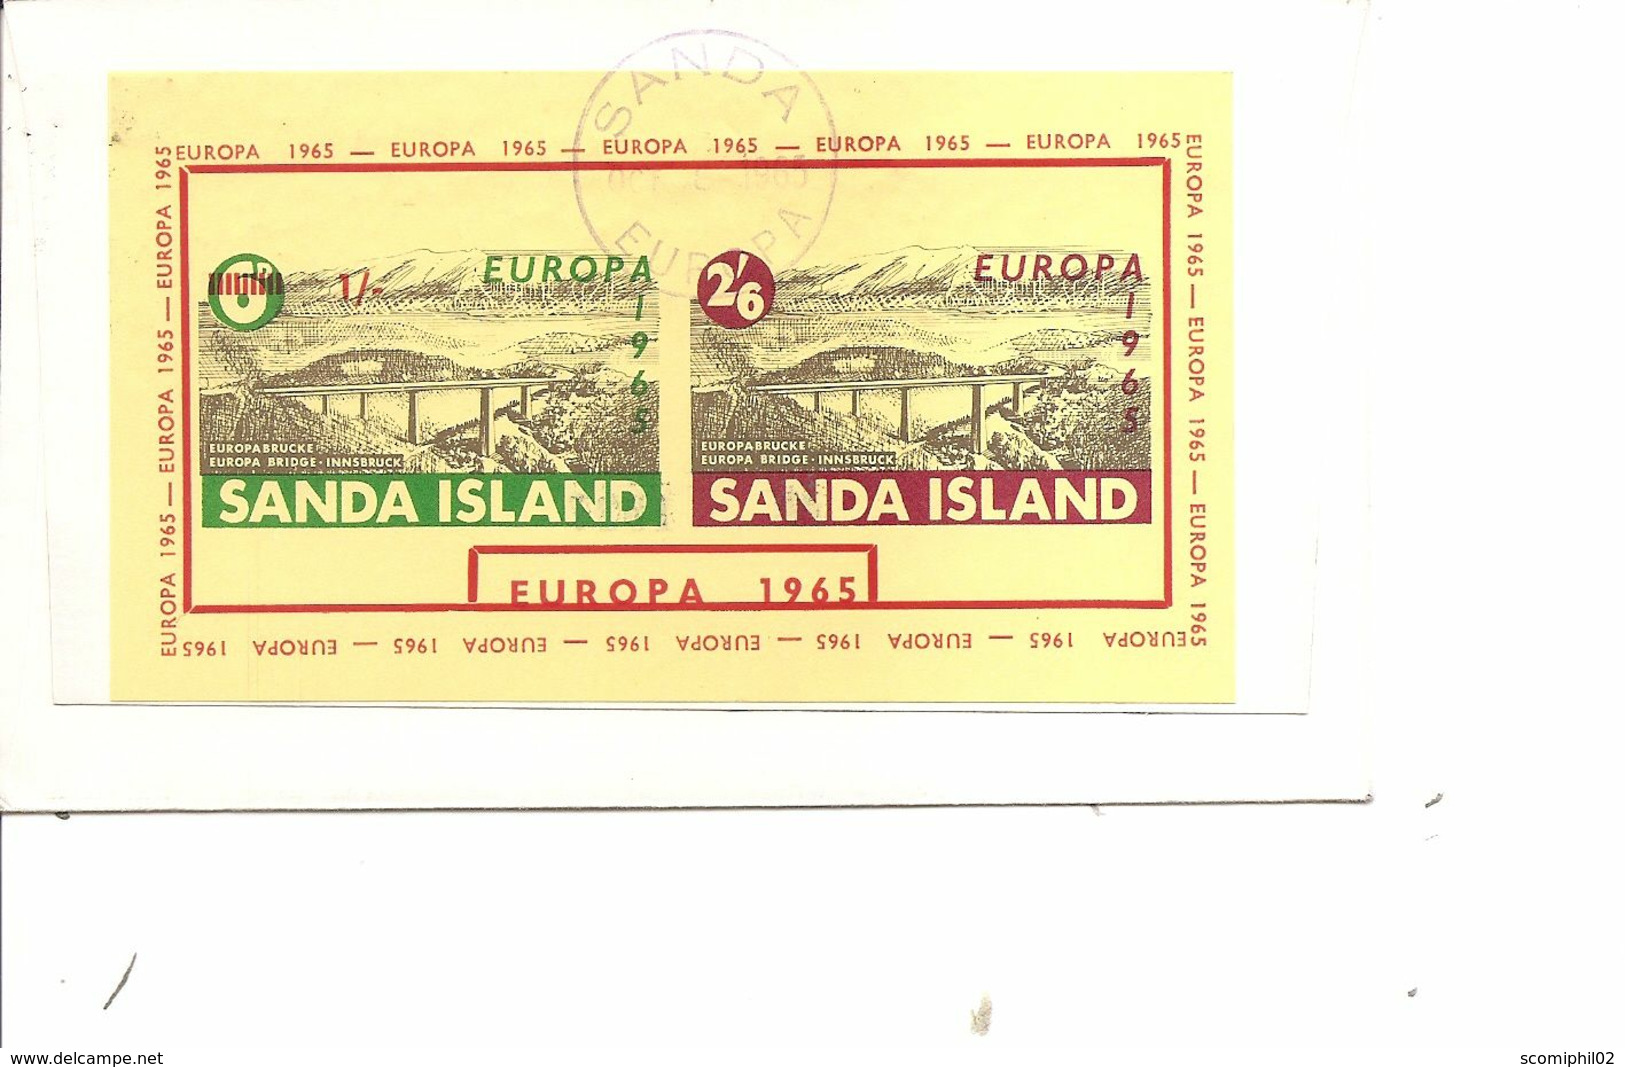 Grande-Bretagne - Locales - Sanda Island -Europa 1965 ( FDc Voyagé De 1965 à Voir) - Local Issues